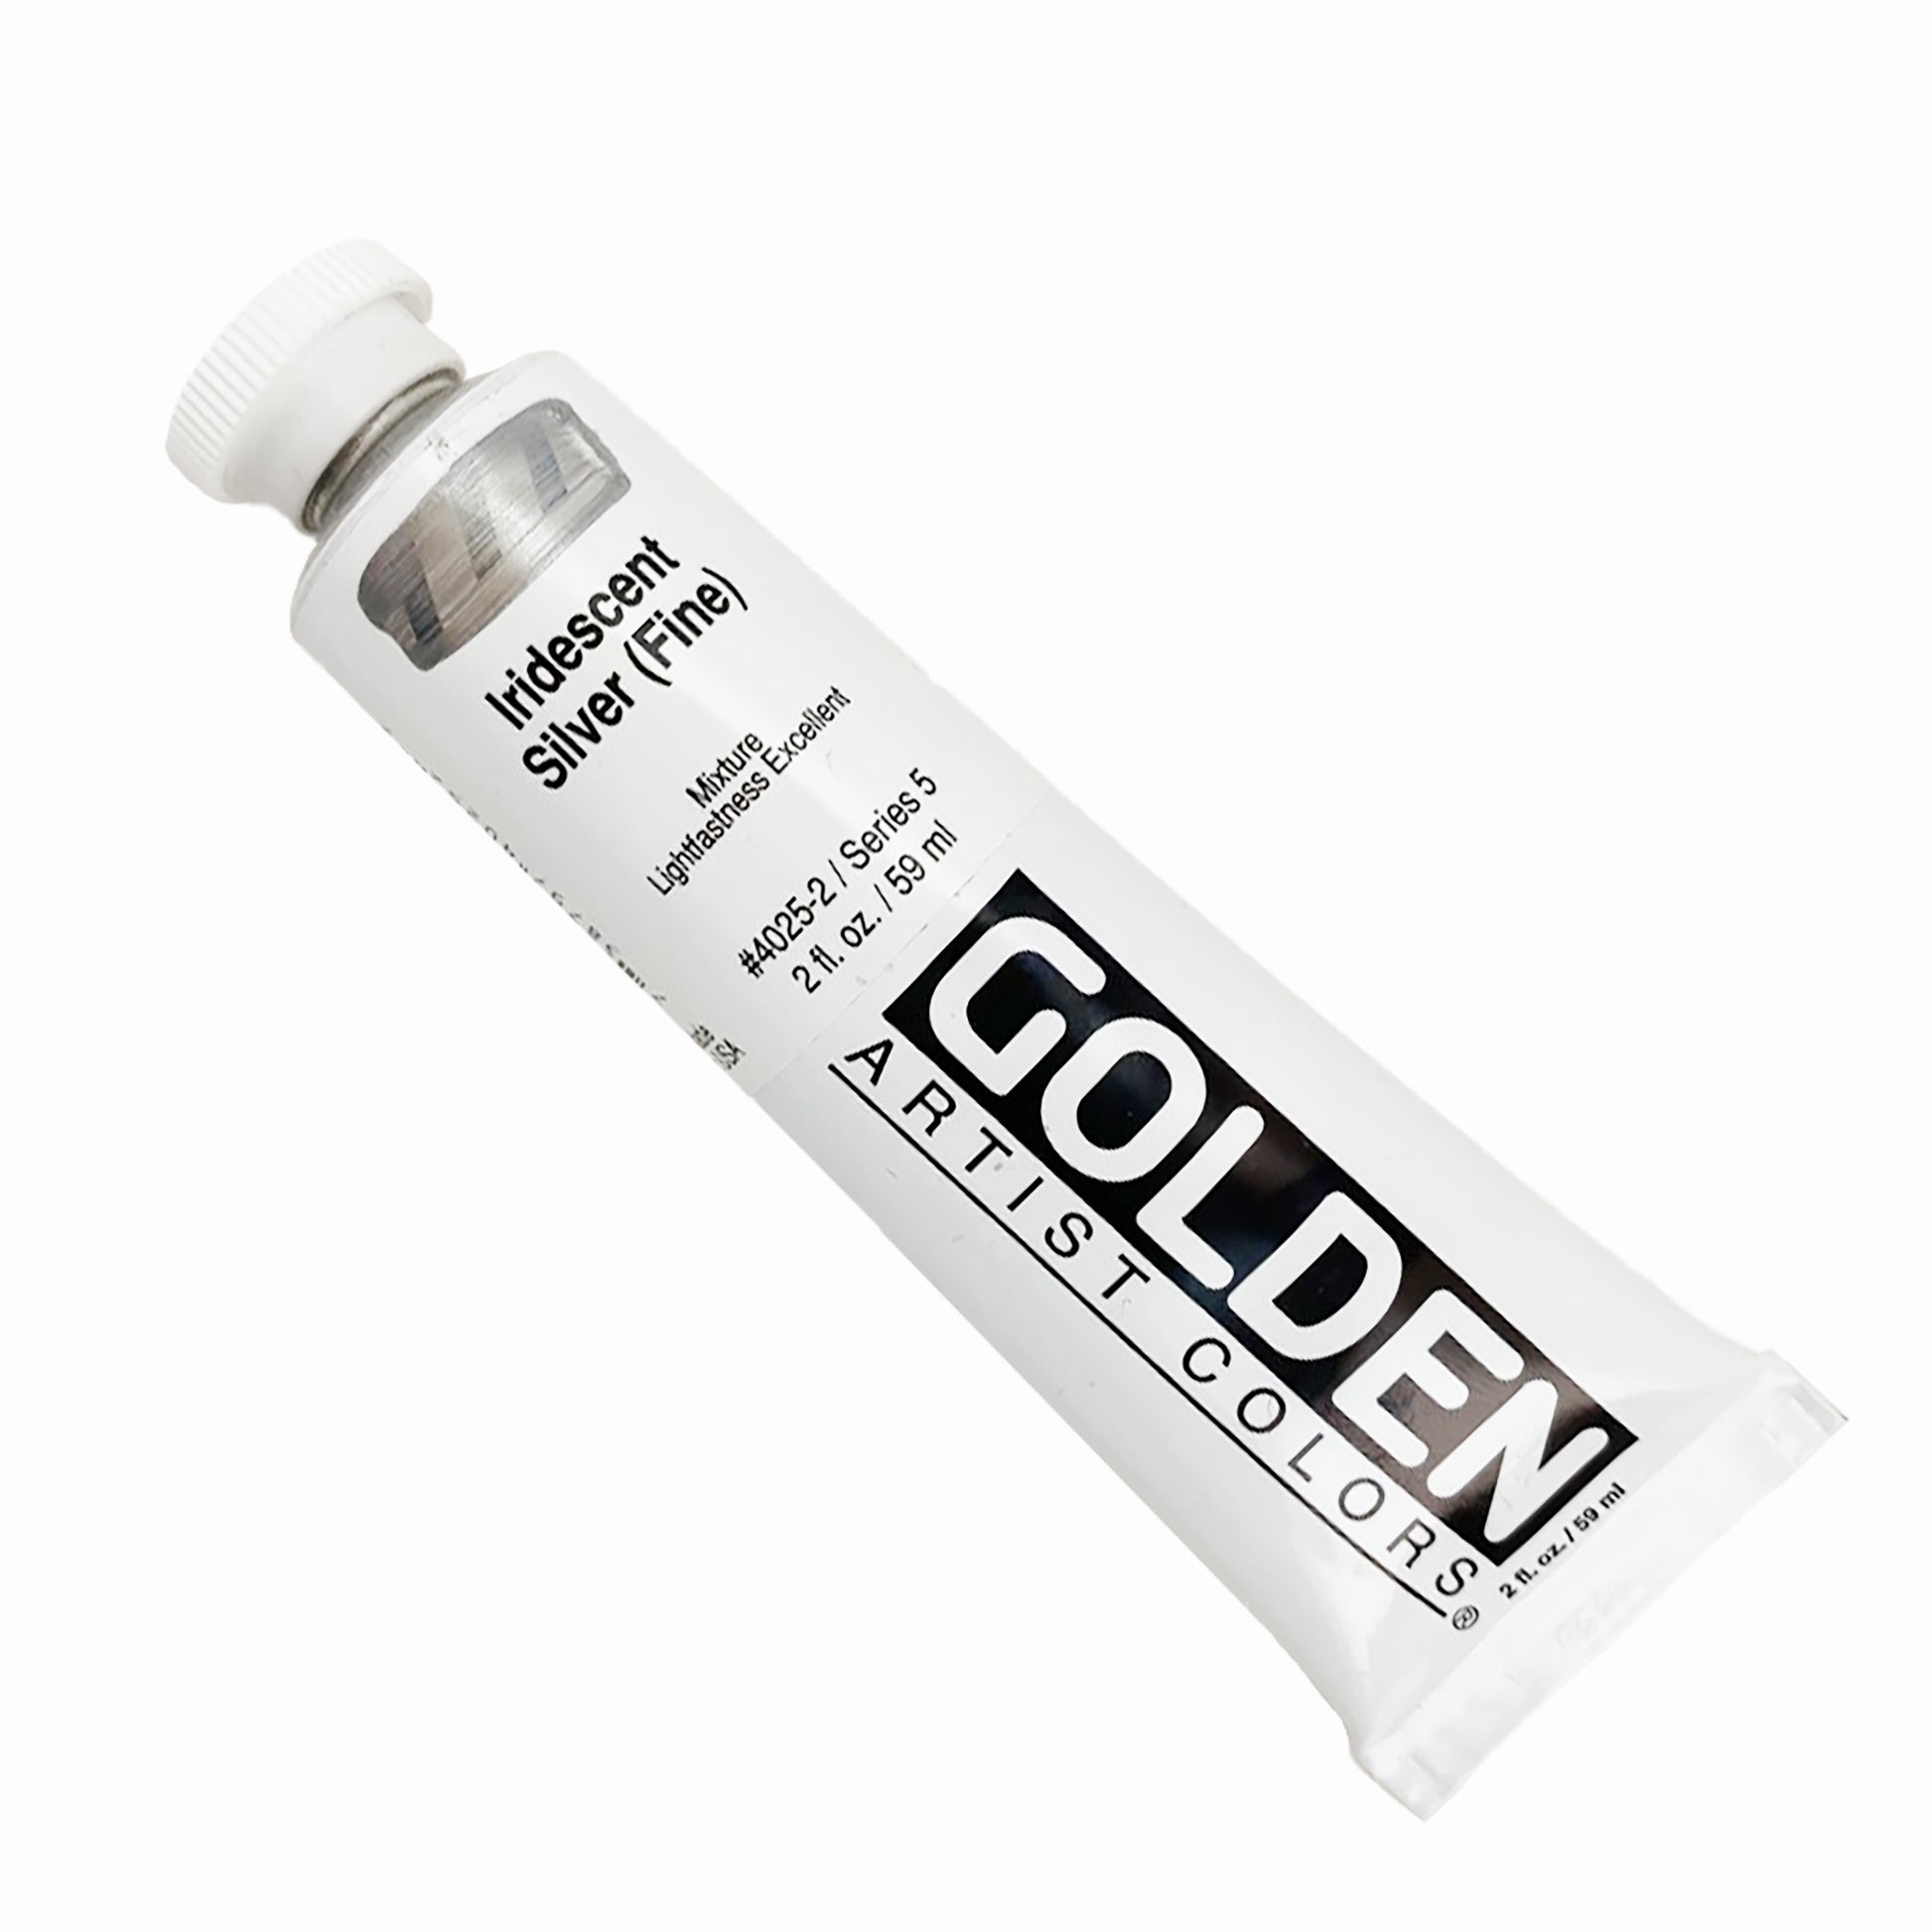 Golden Heavy Body Acrylic - Iridescent Silver (Fine) 2 oz.